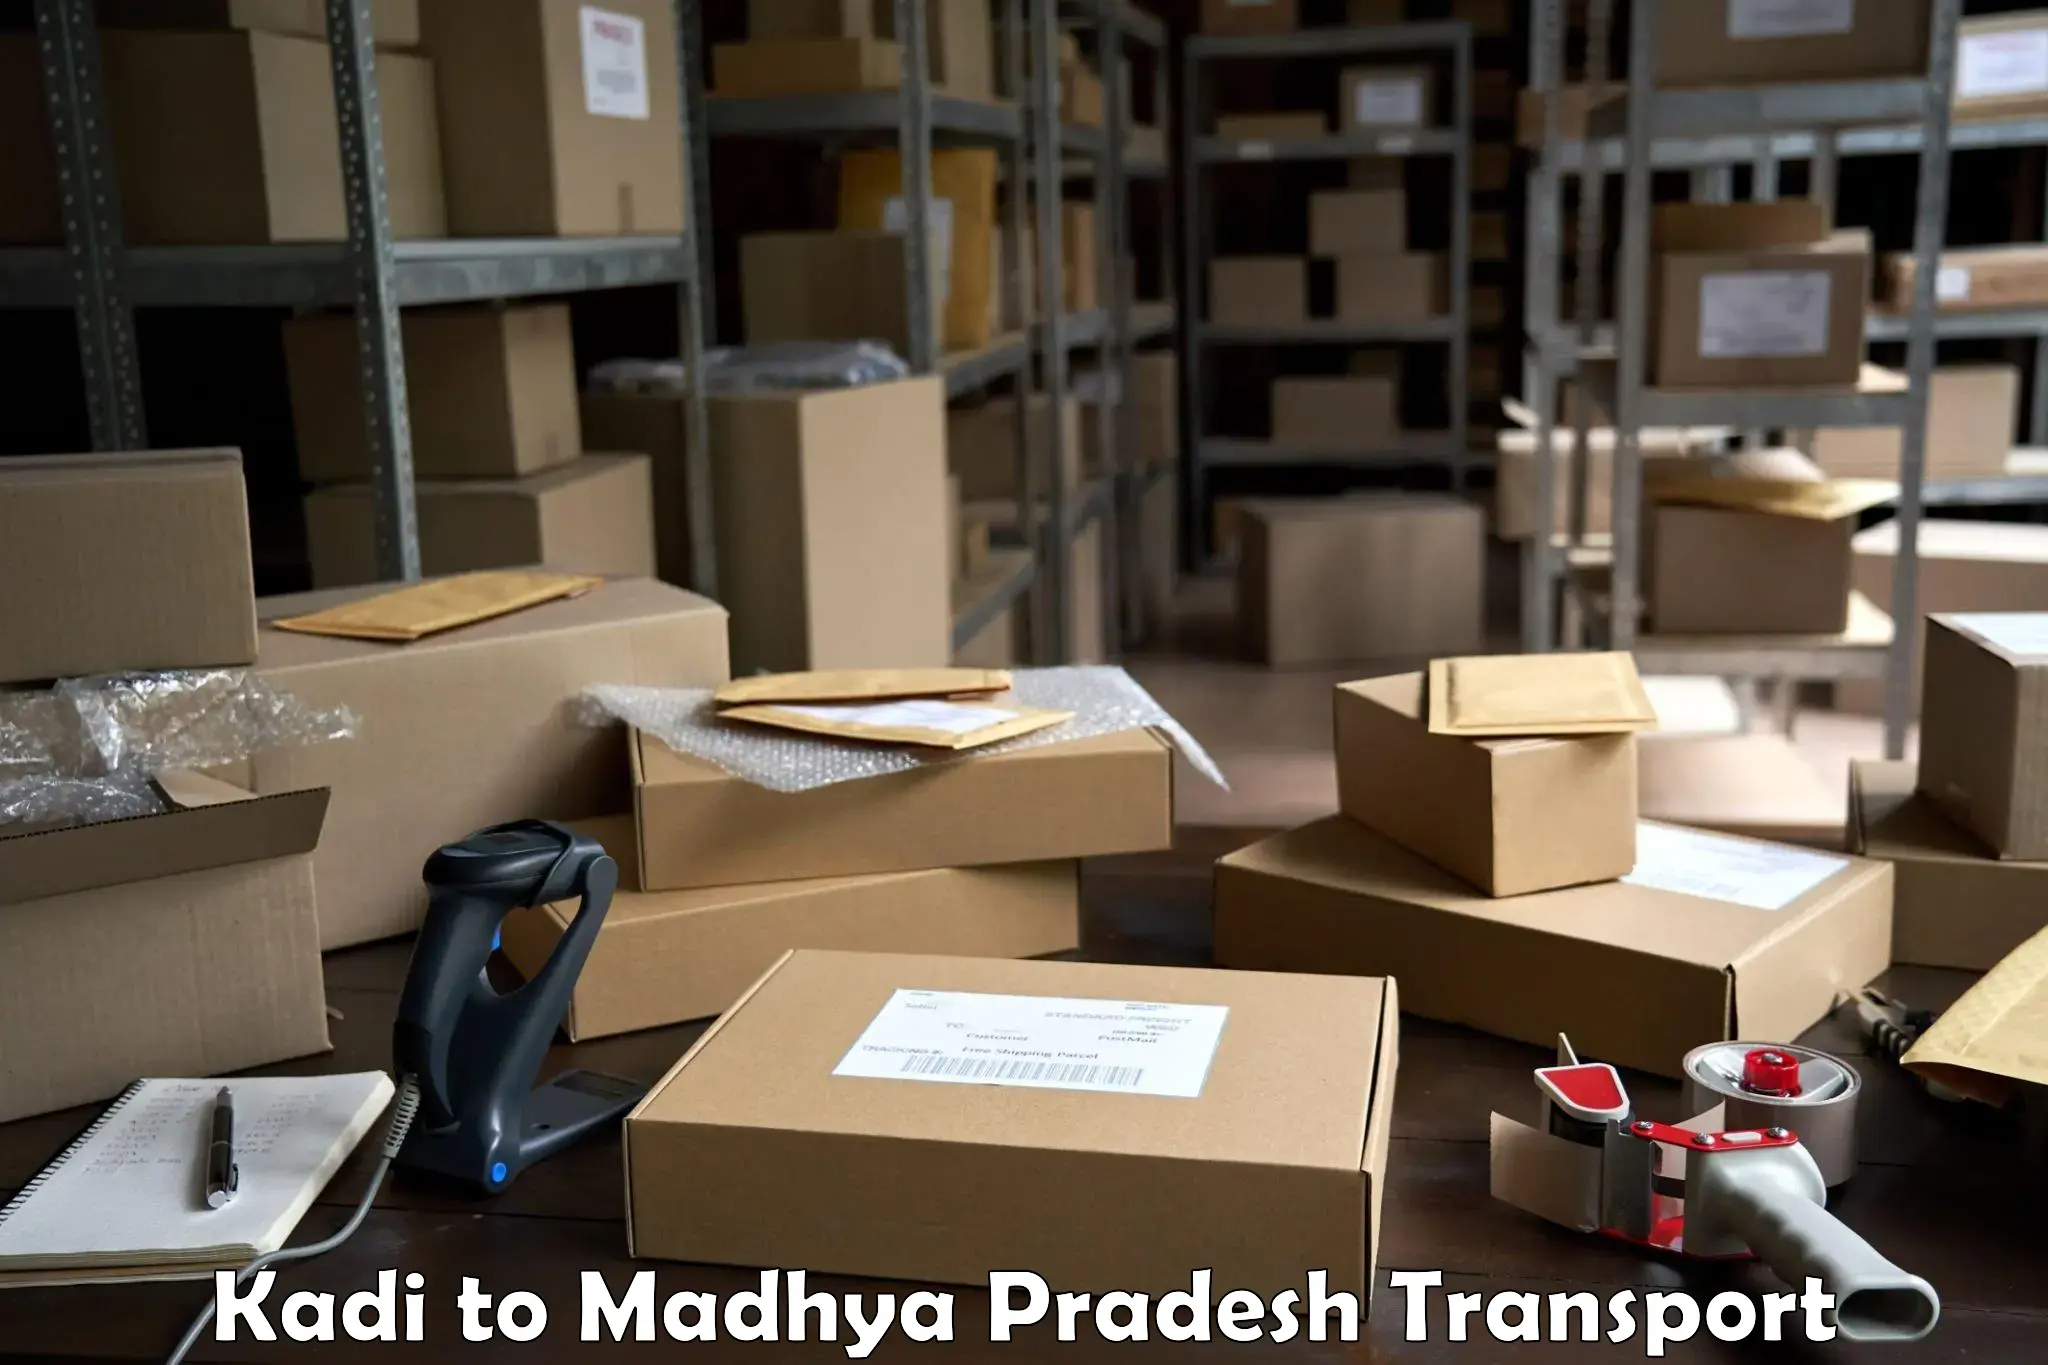 Truck transport companies in India Kadi to Dhamnod